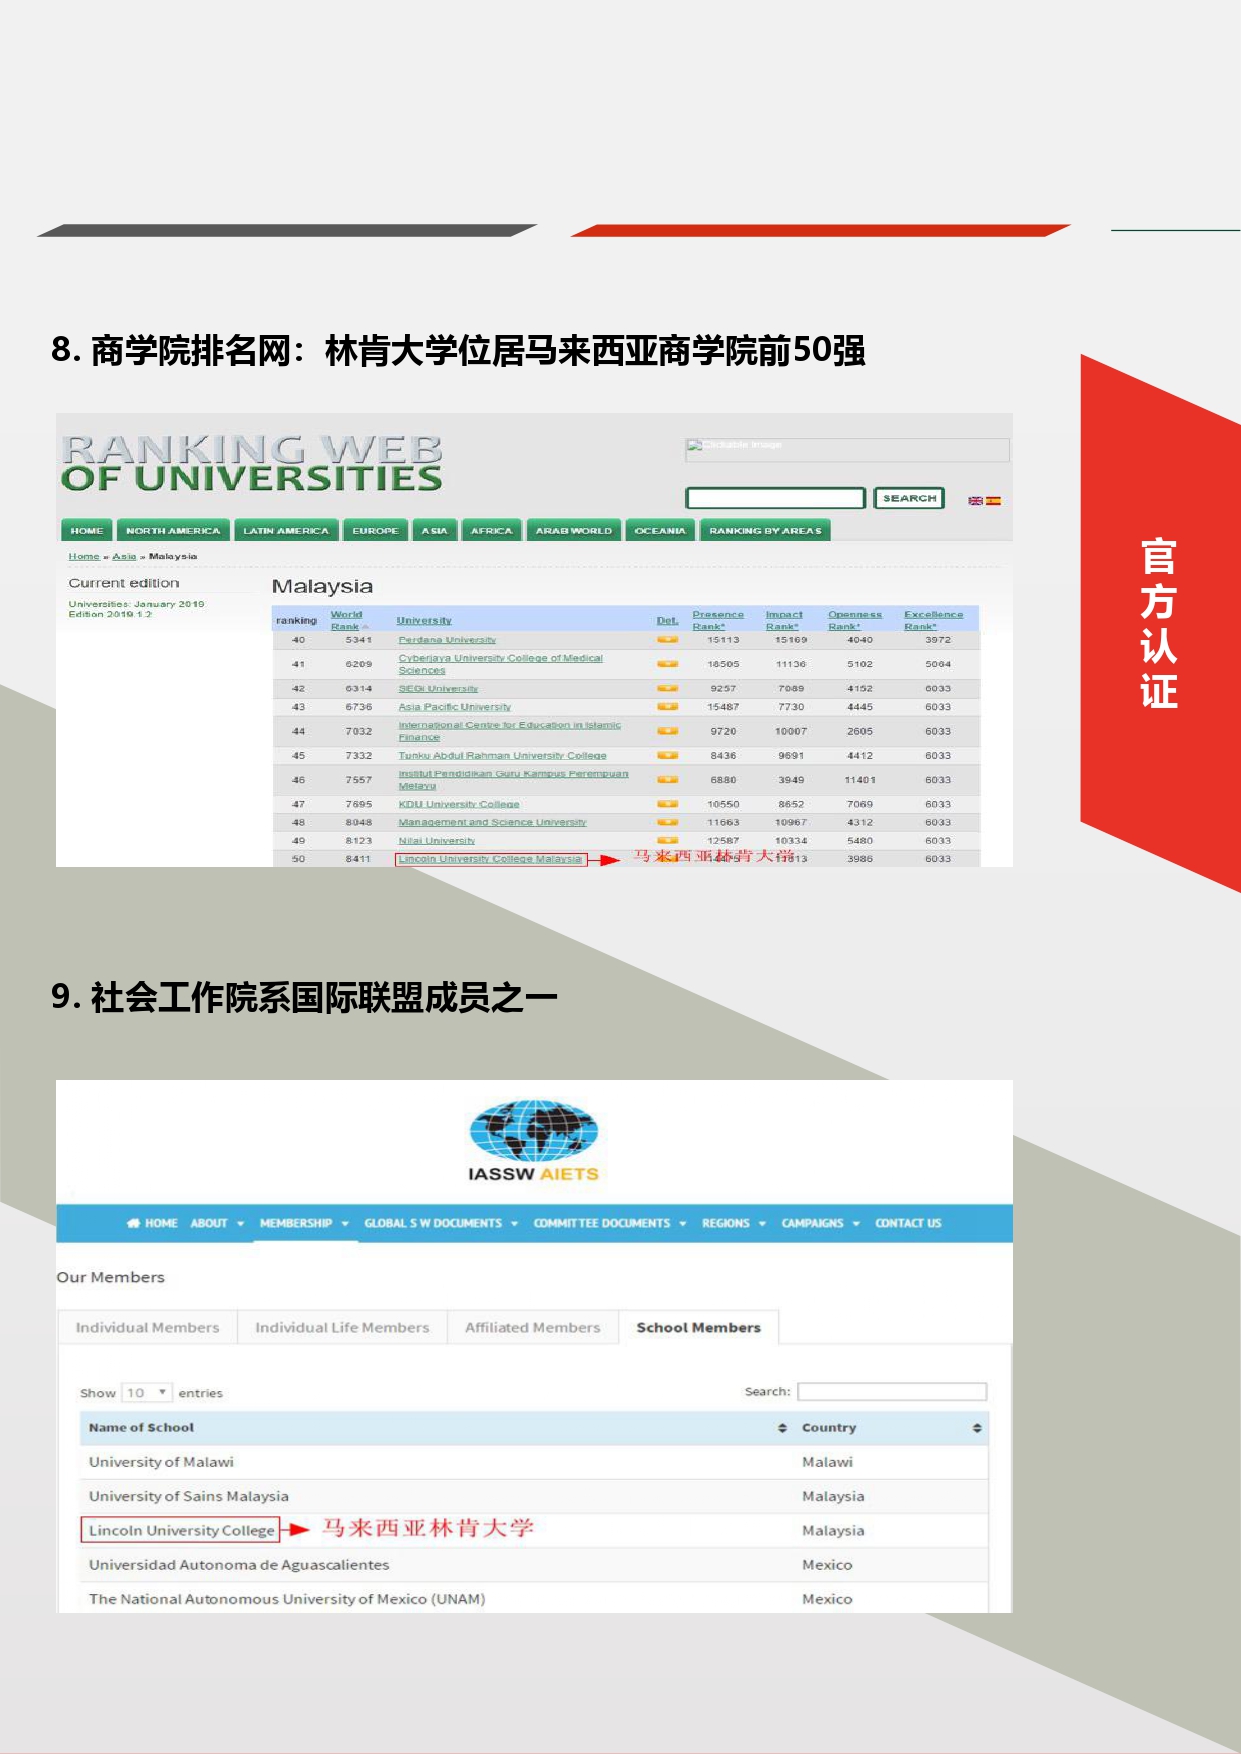 林肯大学 MBA-宣传册(1)_pages-to-jpg-0007.jpg